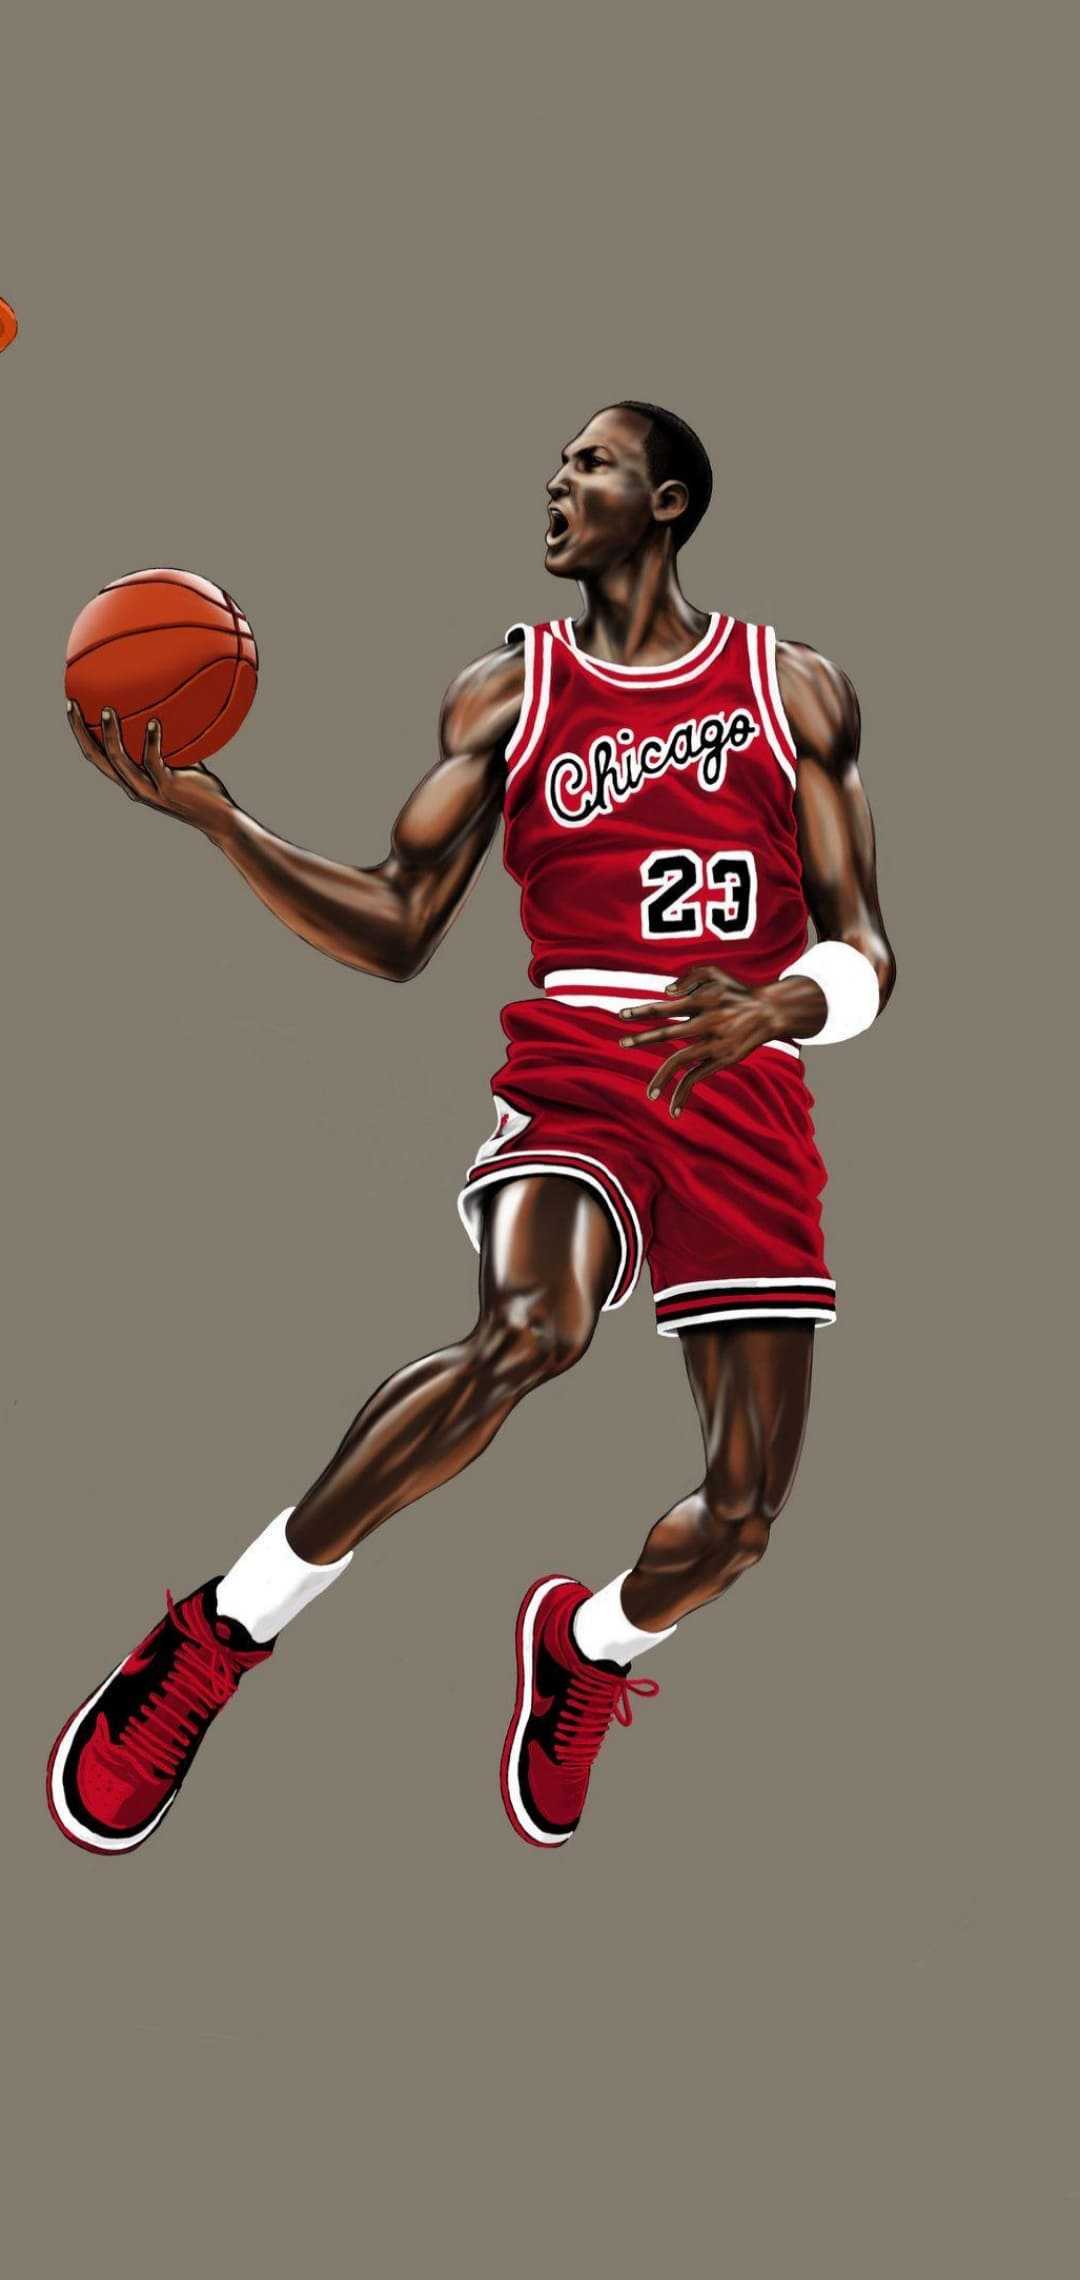 Michael Jordan 1